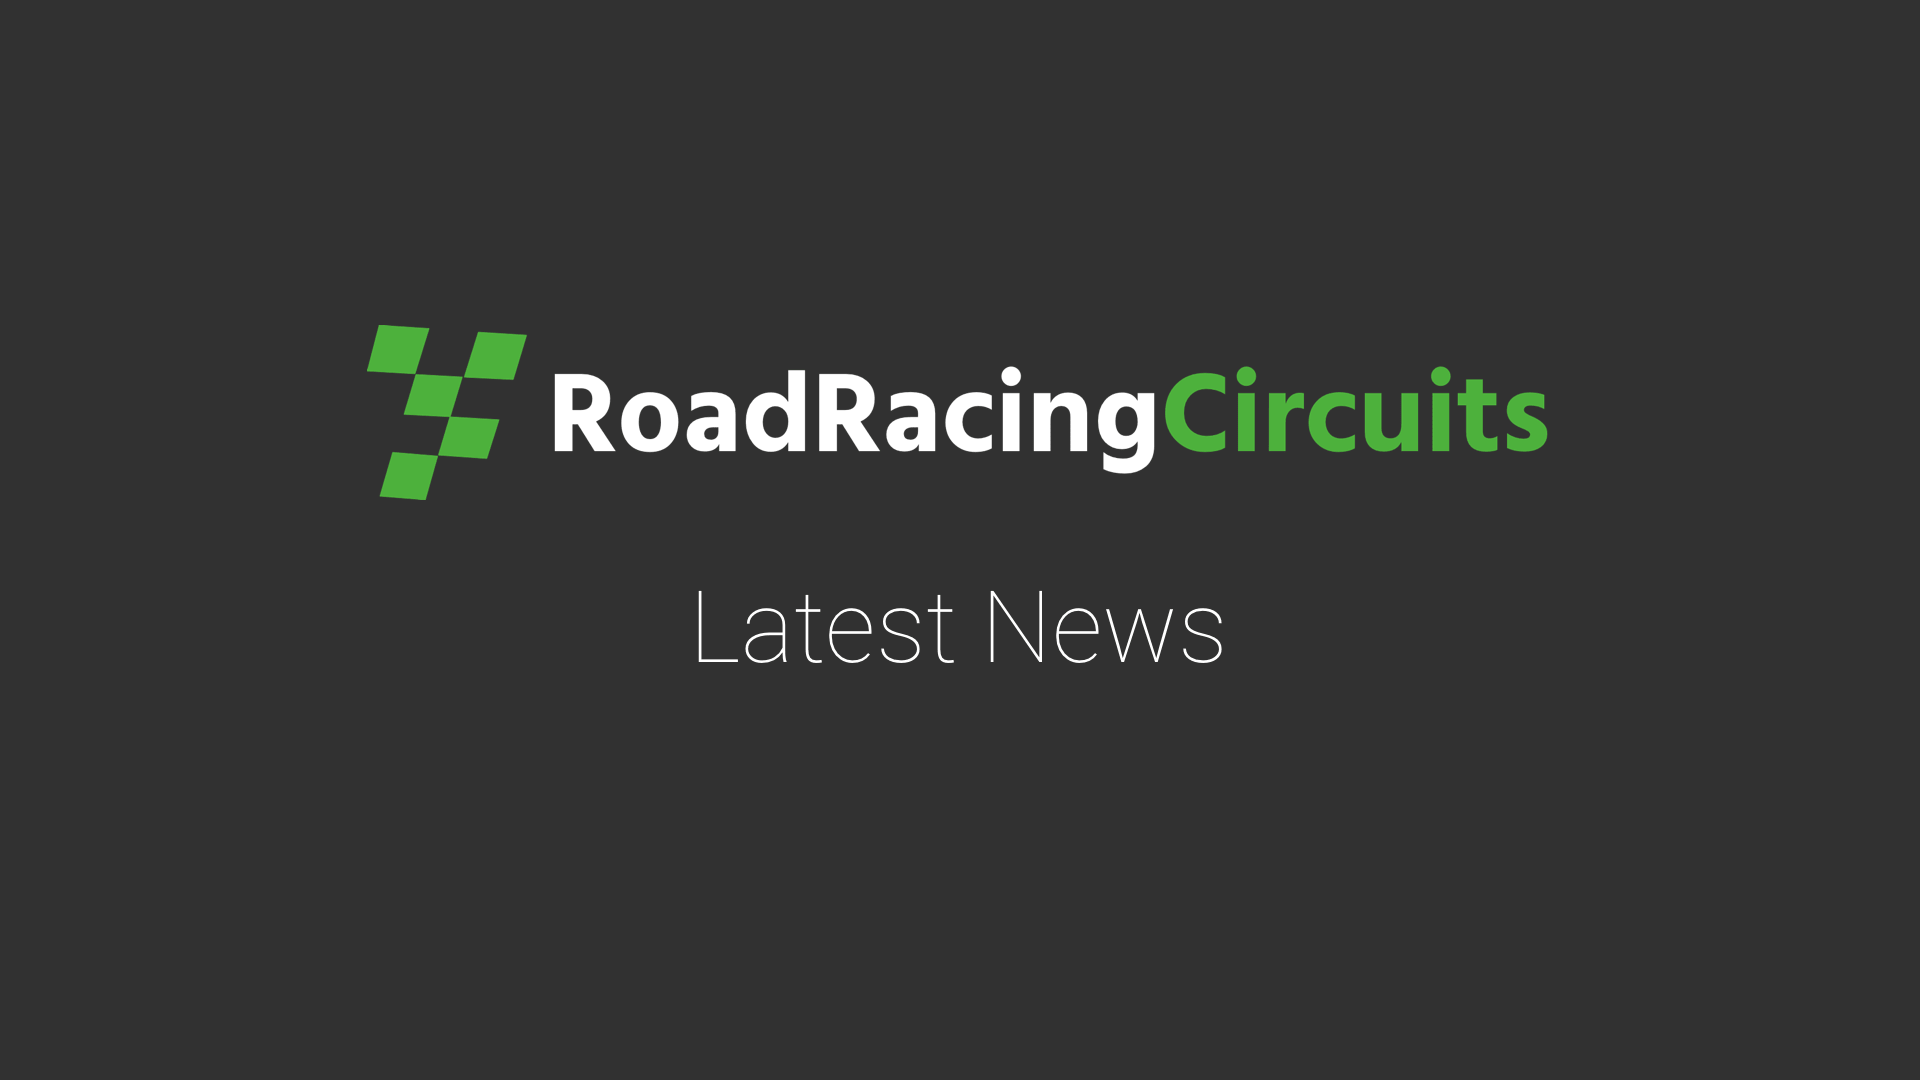 RoadRacingCircuits News is now live